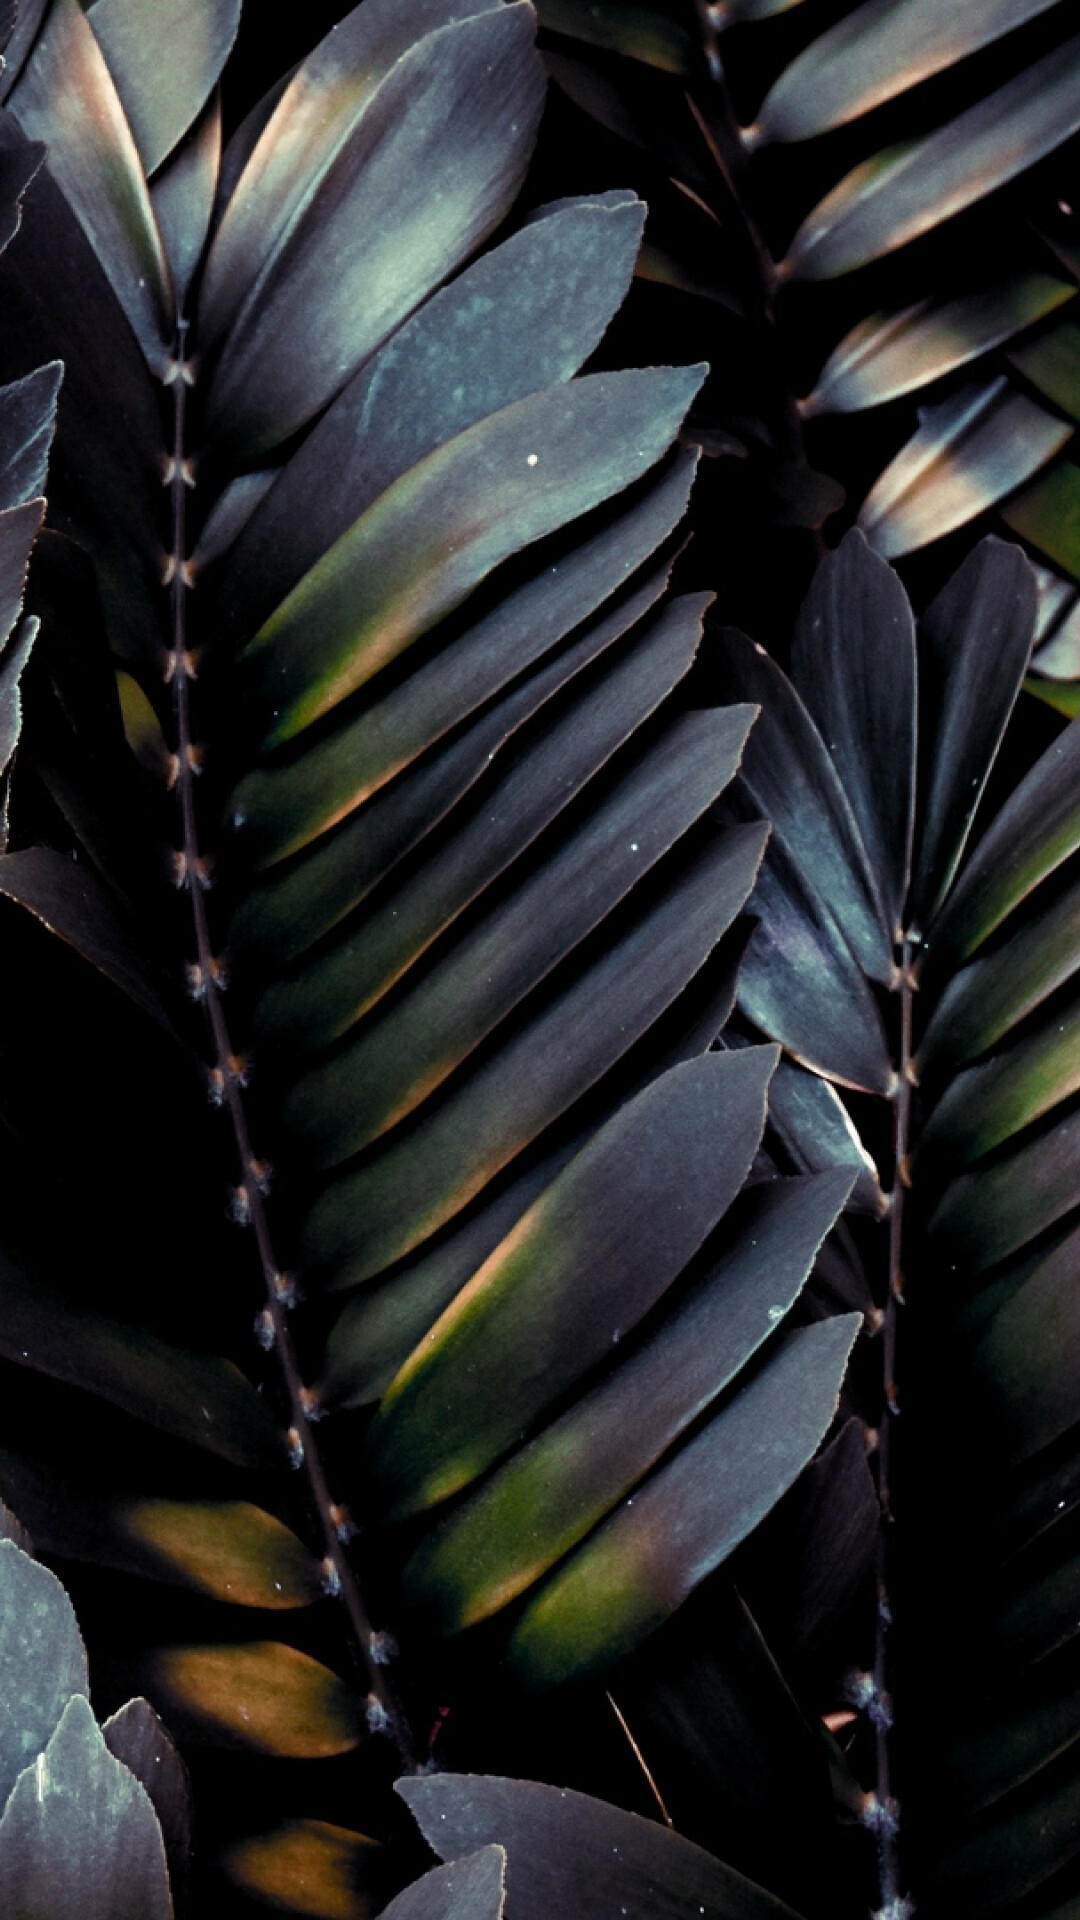 Leaves: Beautiful tropical foliage, Feather-like leaf. 1080x1920 Full HD Wallpaper.